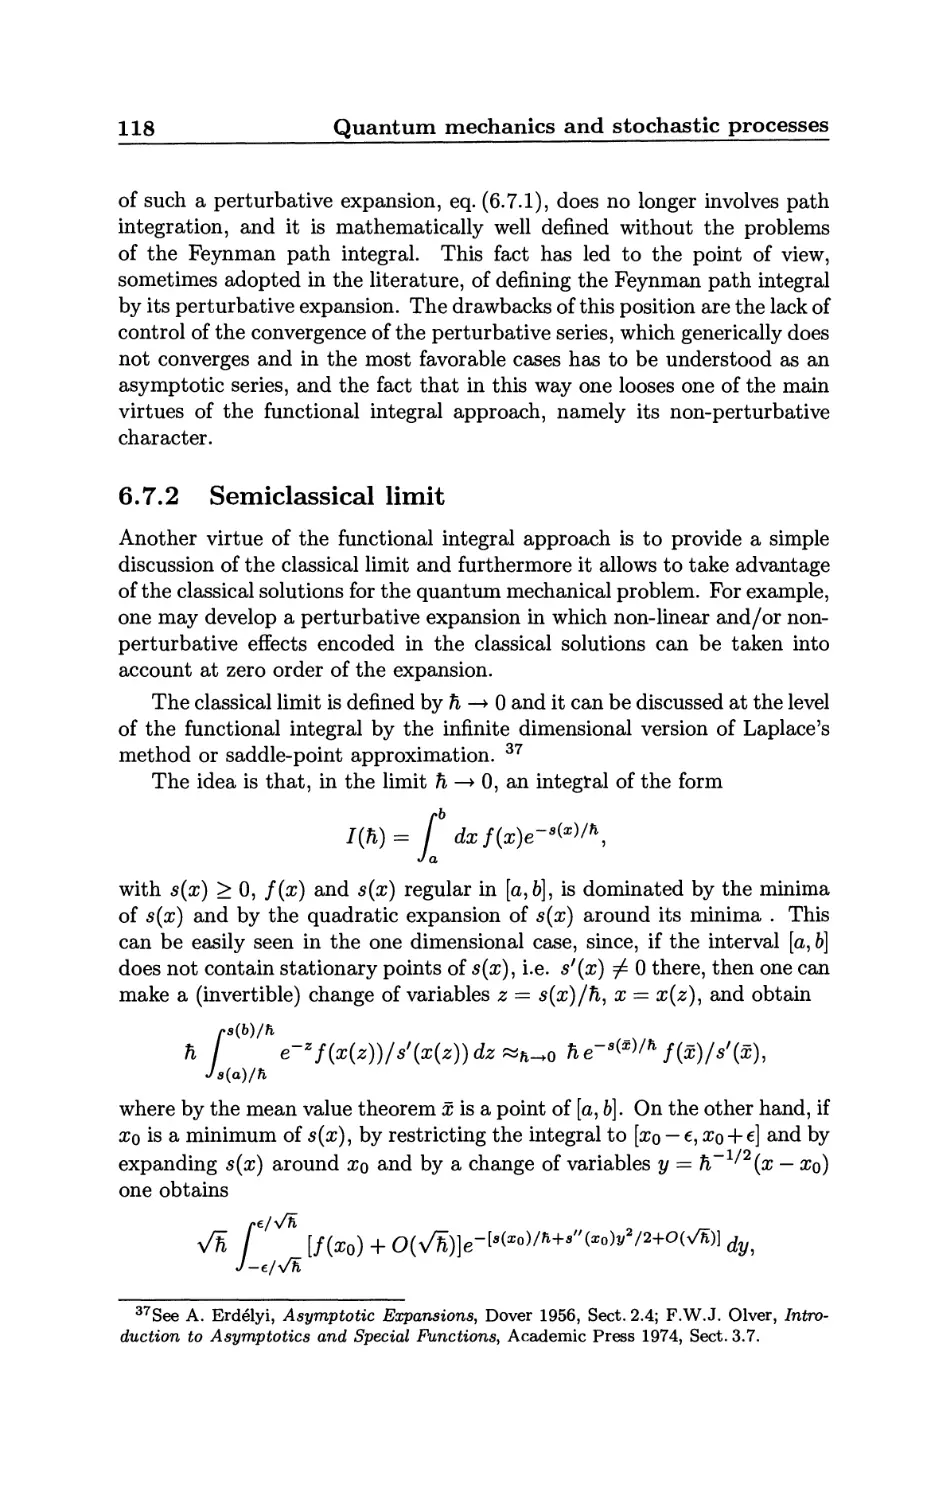 6.7.2 Semiclassical limit